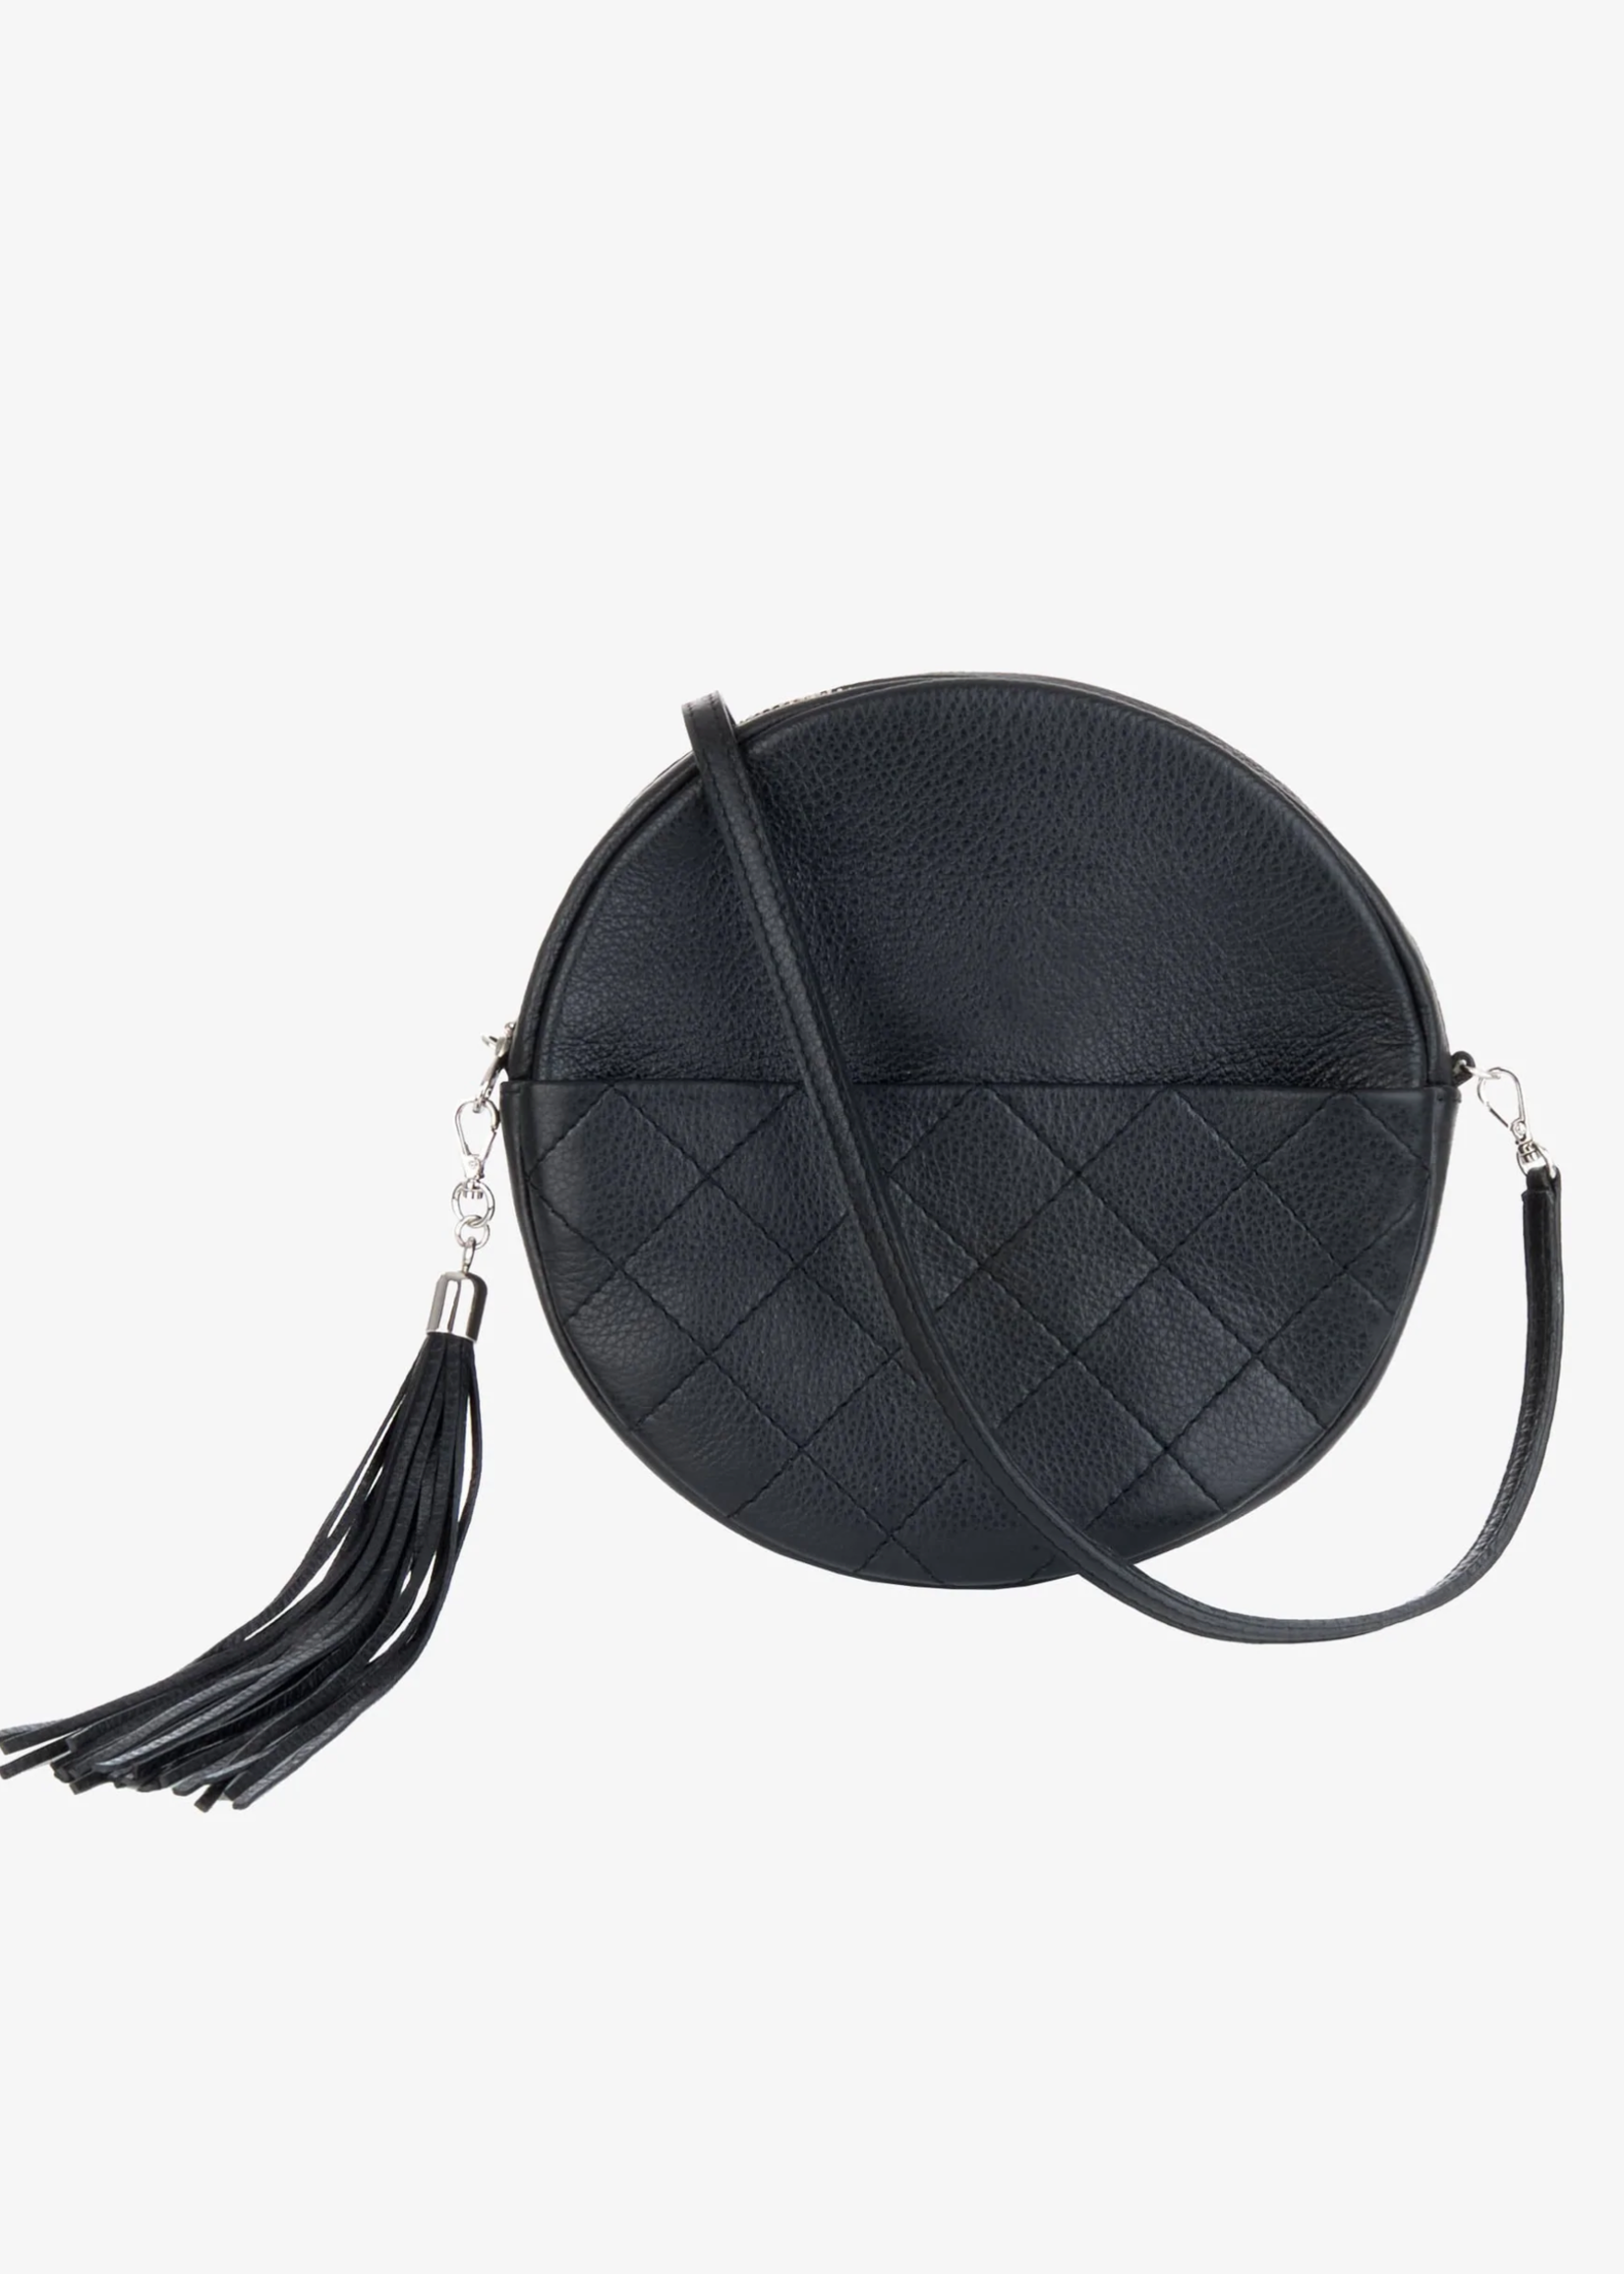 BRAVE Leather Chiara Pebbled Bag - Black